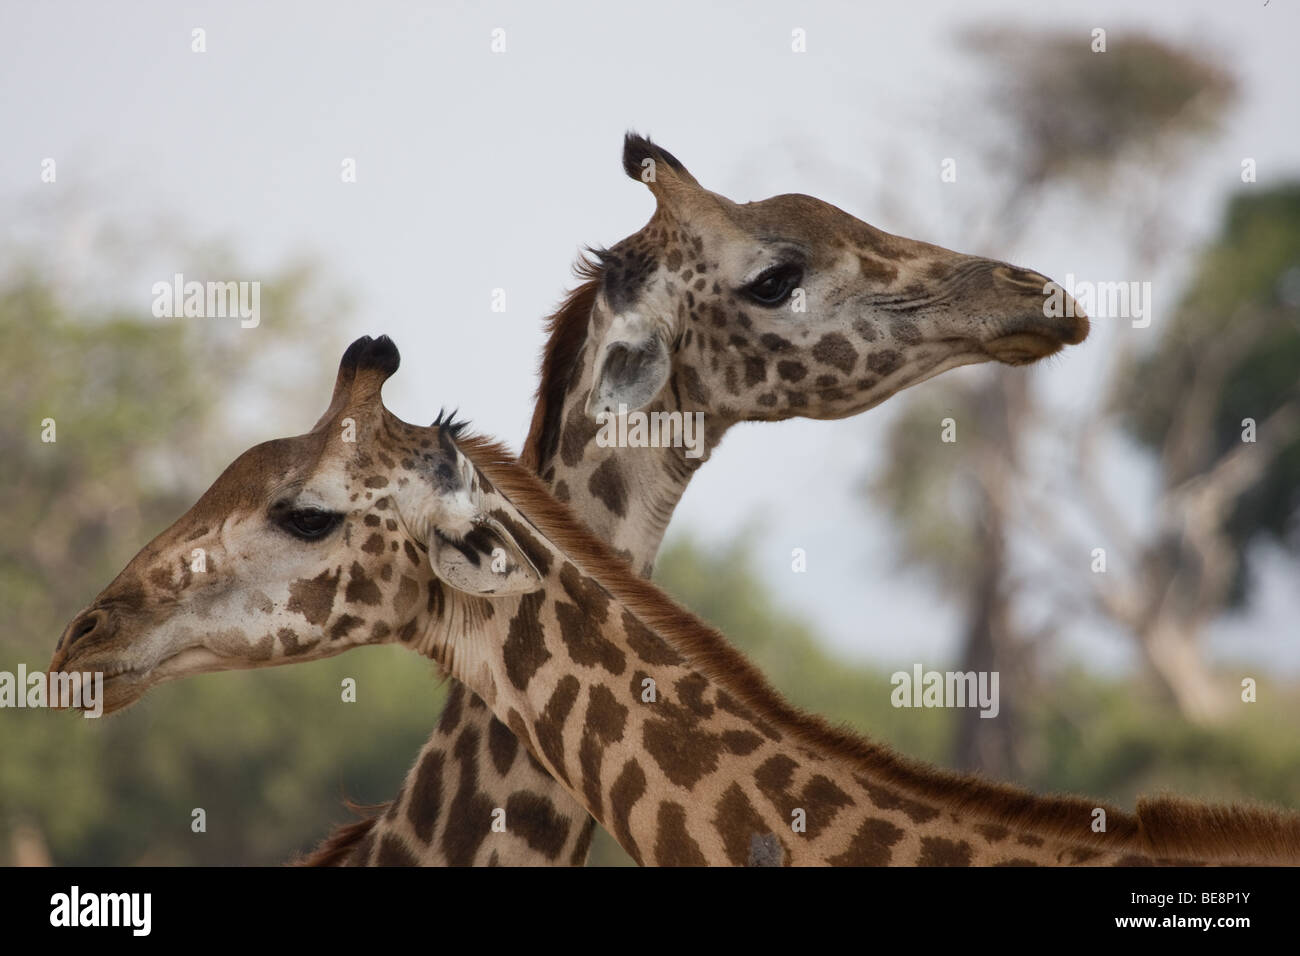 2 Giraffes with their necks crossed posing looking around Stock Photo